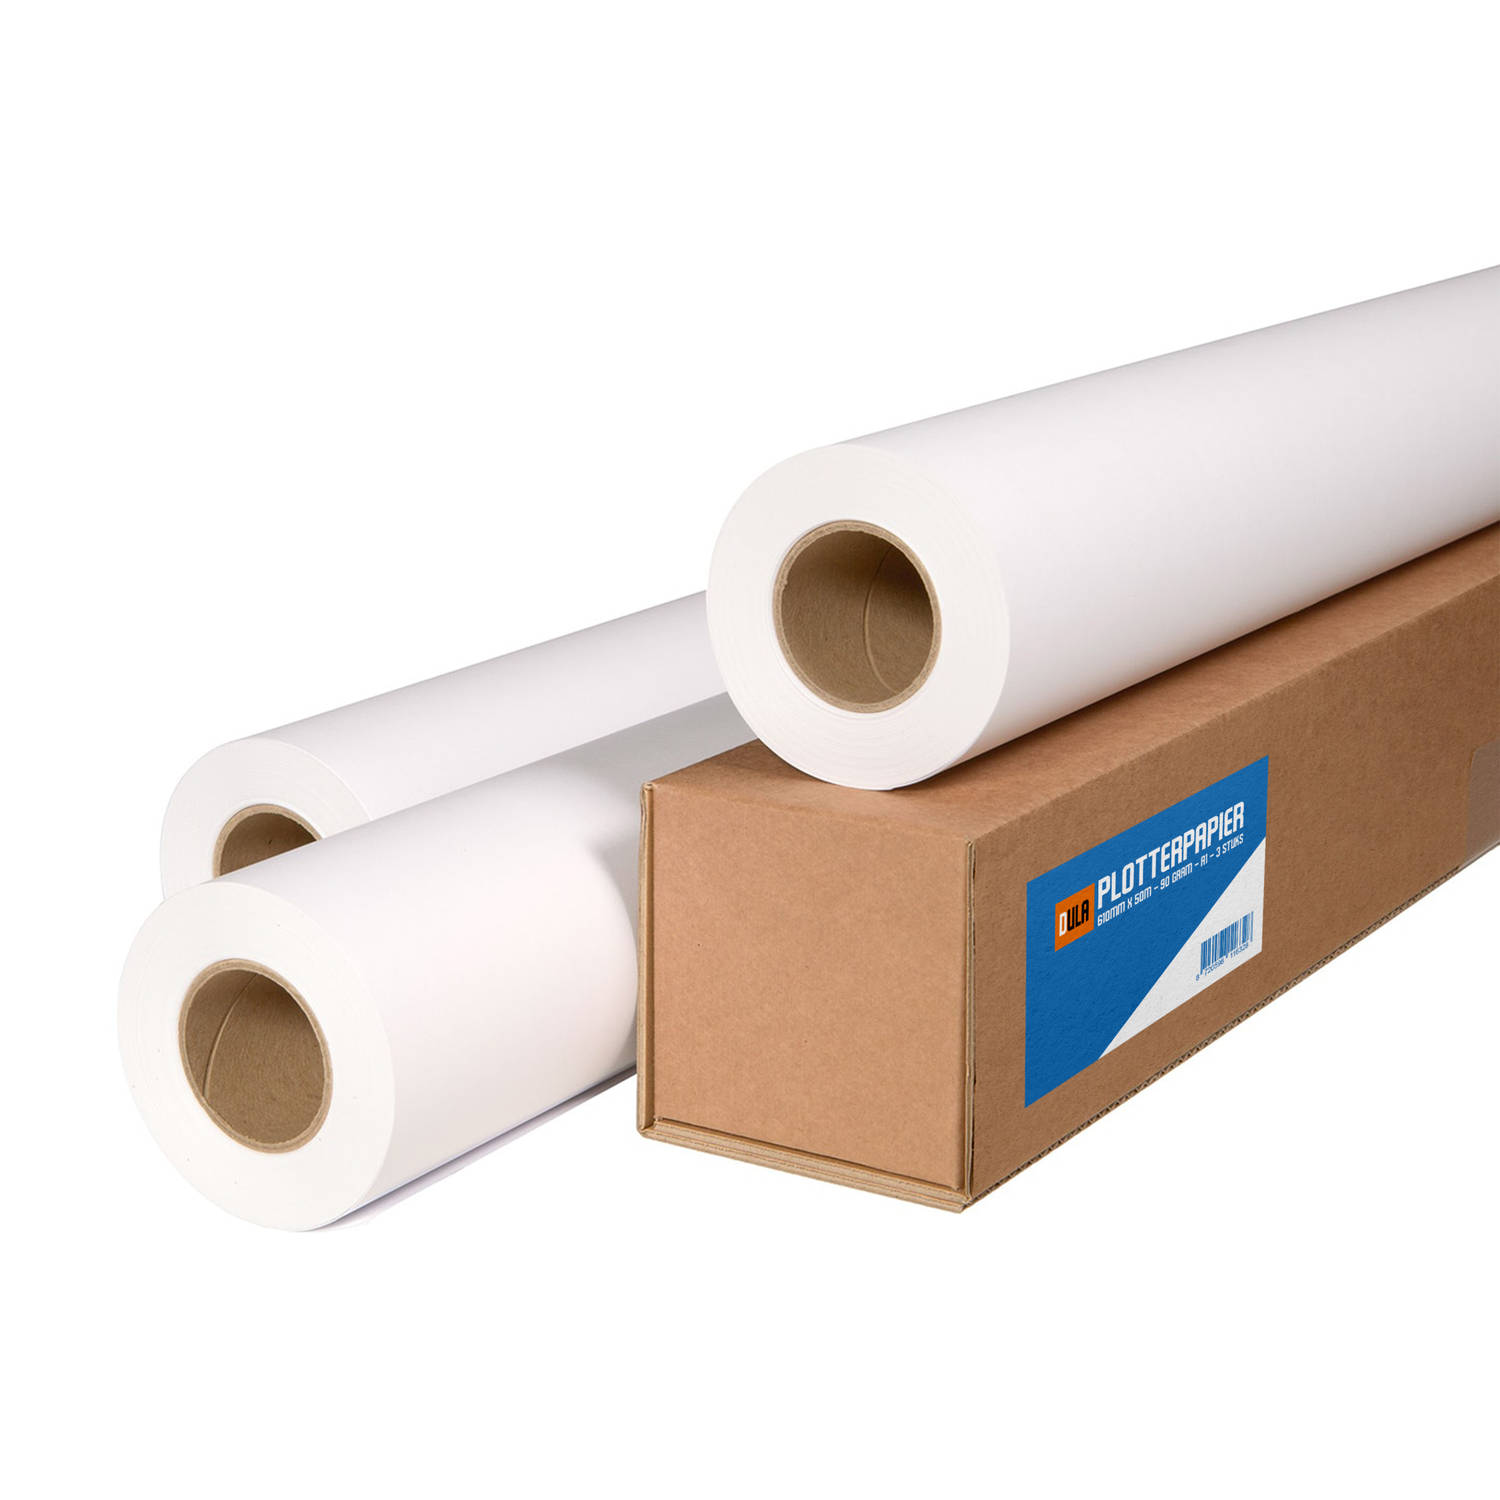 DULA Plotterpapier inkjetpapier 610mm x 50m 90 gram 3 rollen A1 oversize papier 24 inch